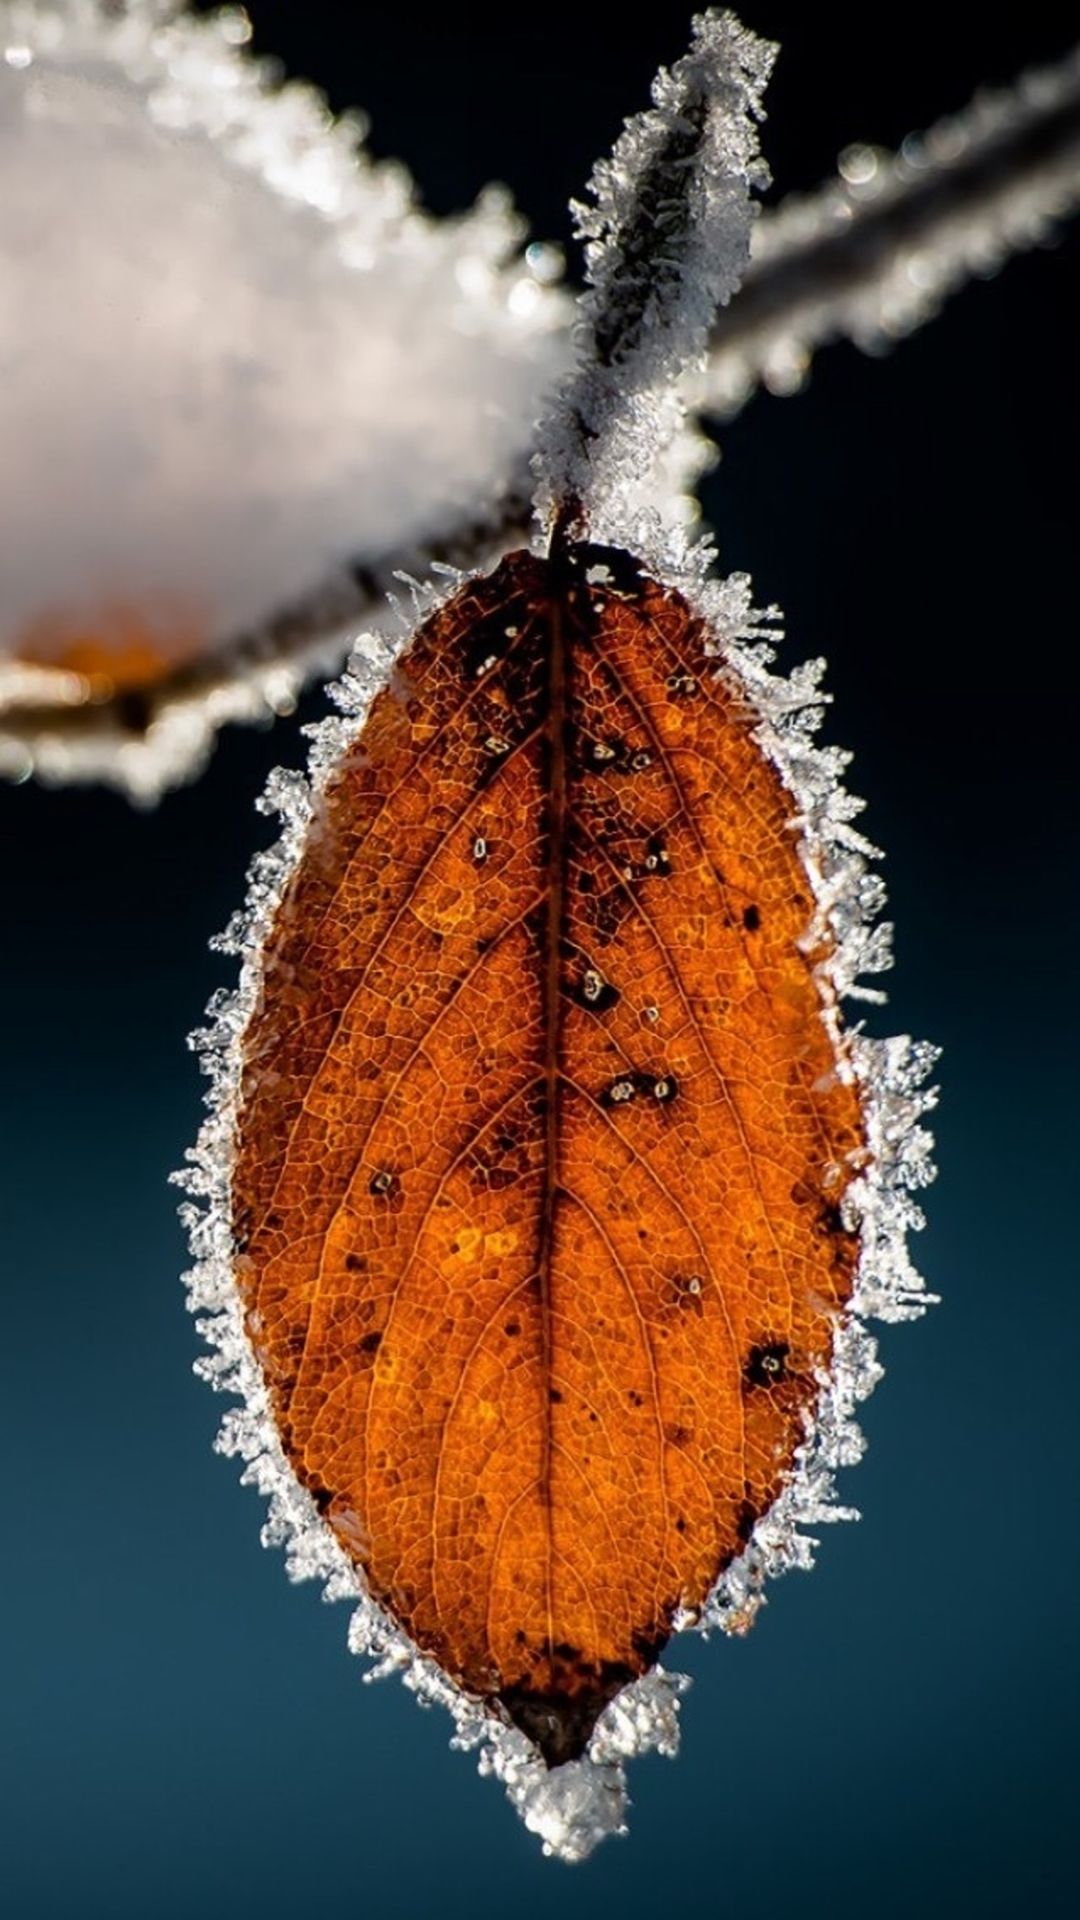 Winter - Icy Leaf - Macro photography | Snow & Ice | Pinterest ...